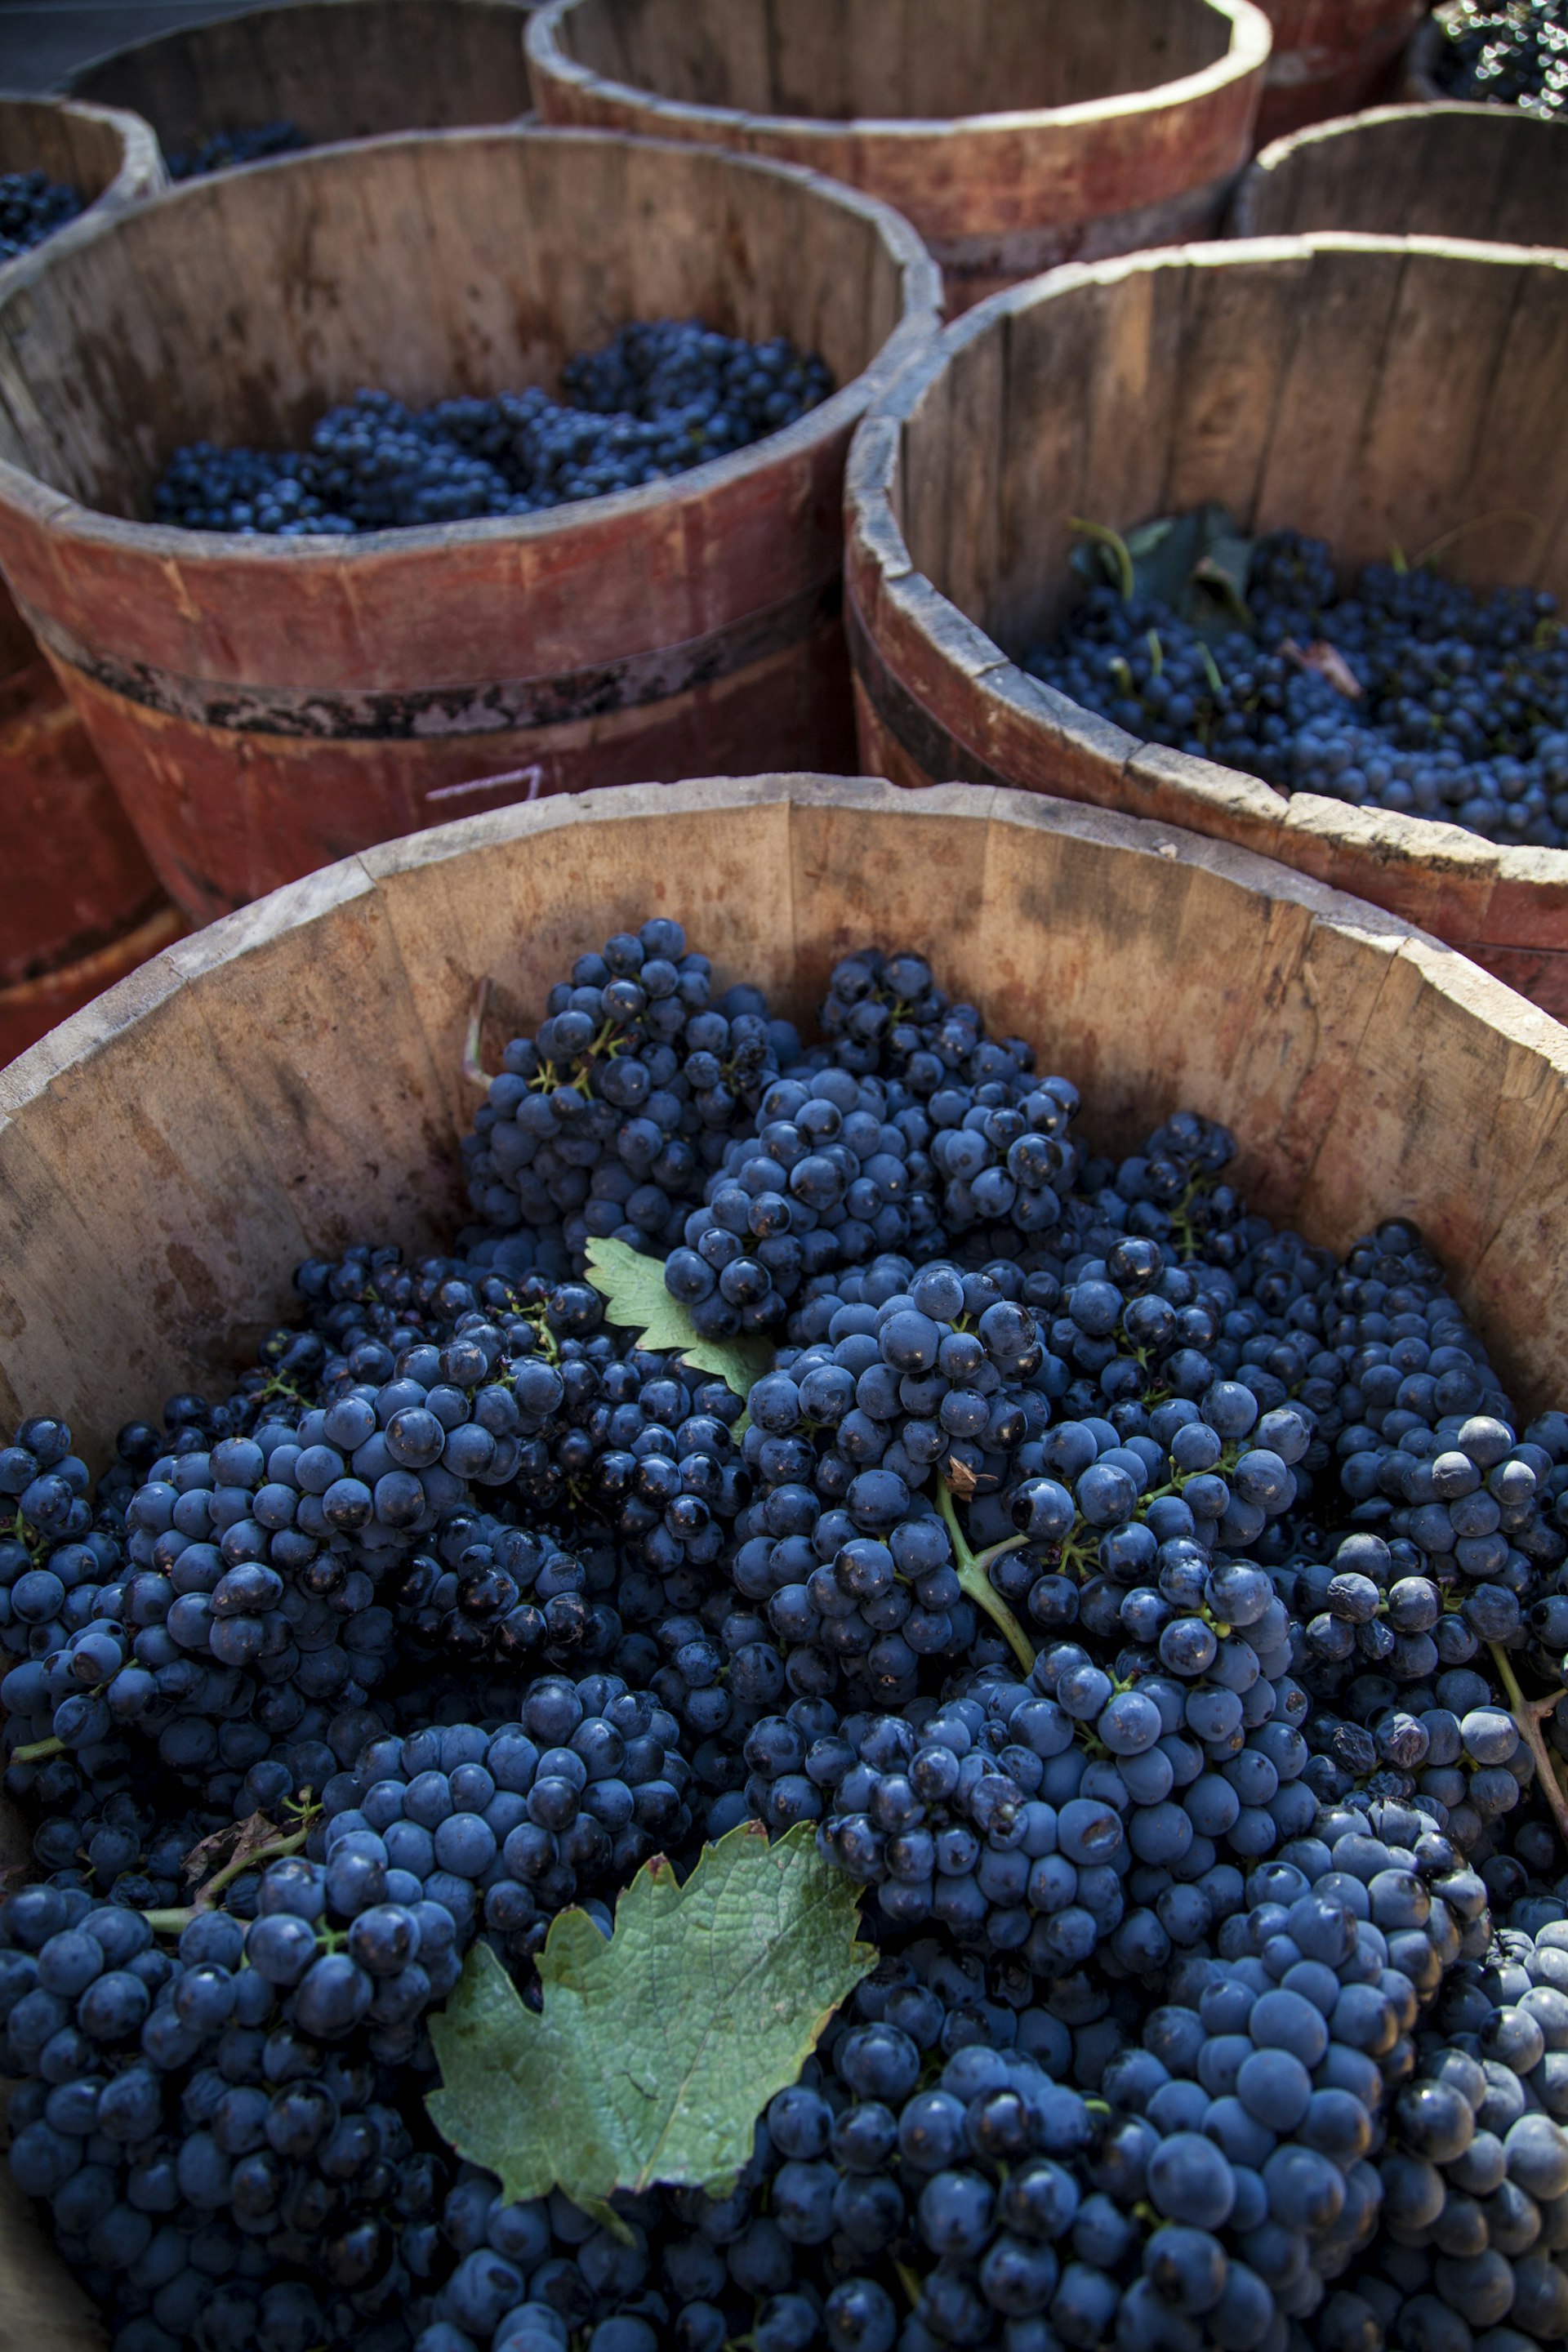 Dark grapes in several barrels at a wine cellar in Haro, La Rioja